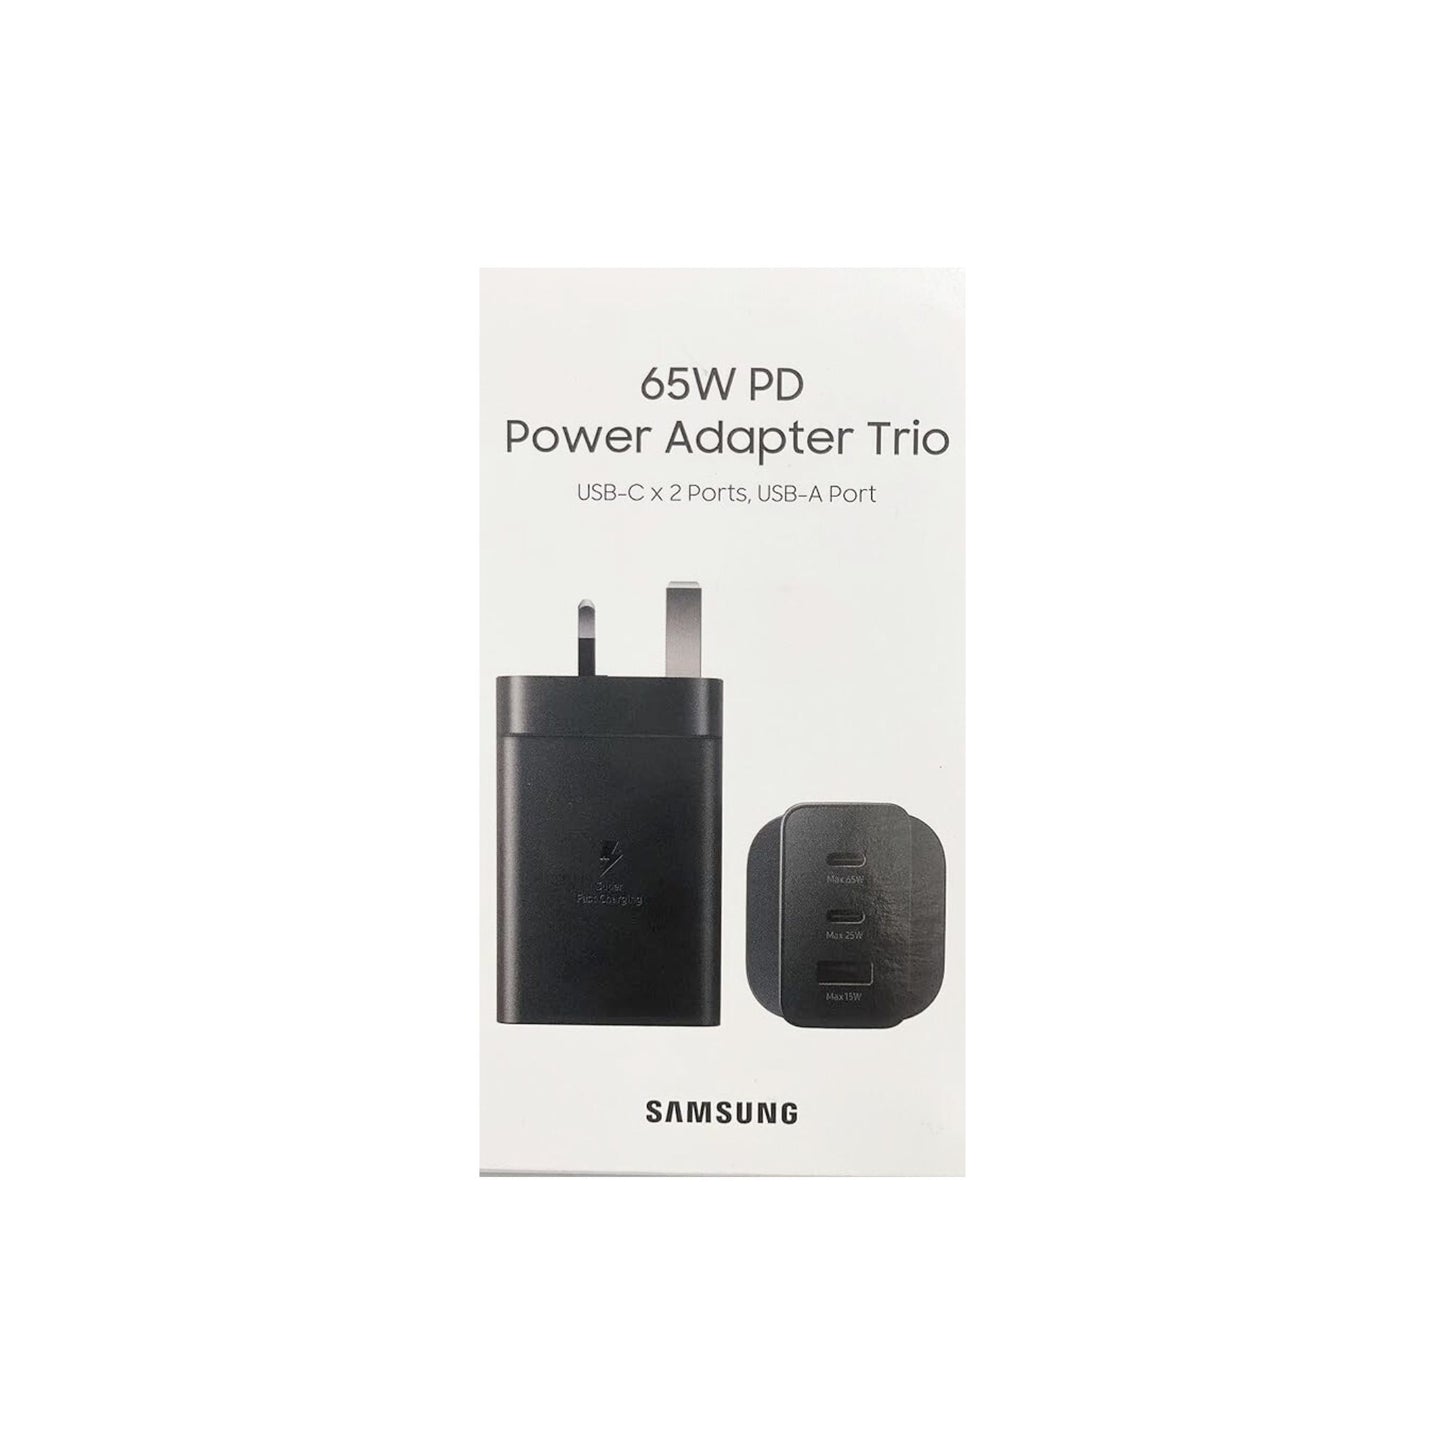 Samsung 65W Power Adapter Trio, Black, EP-T6530NBEGGB